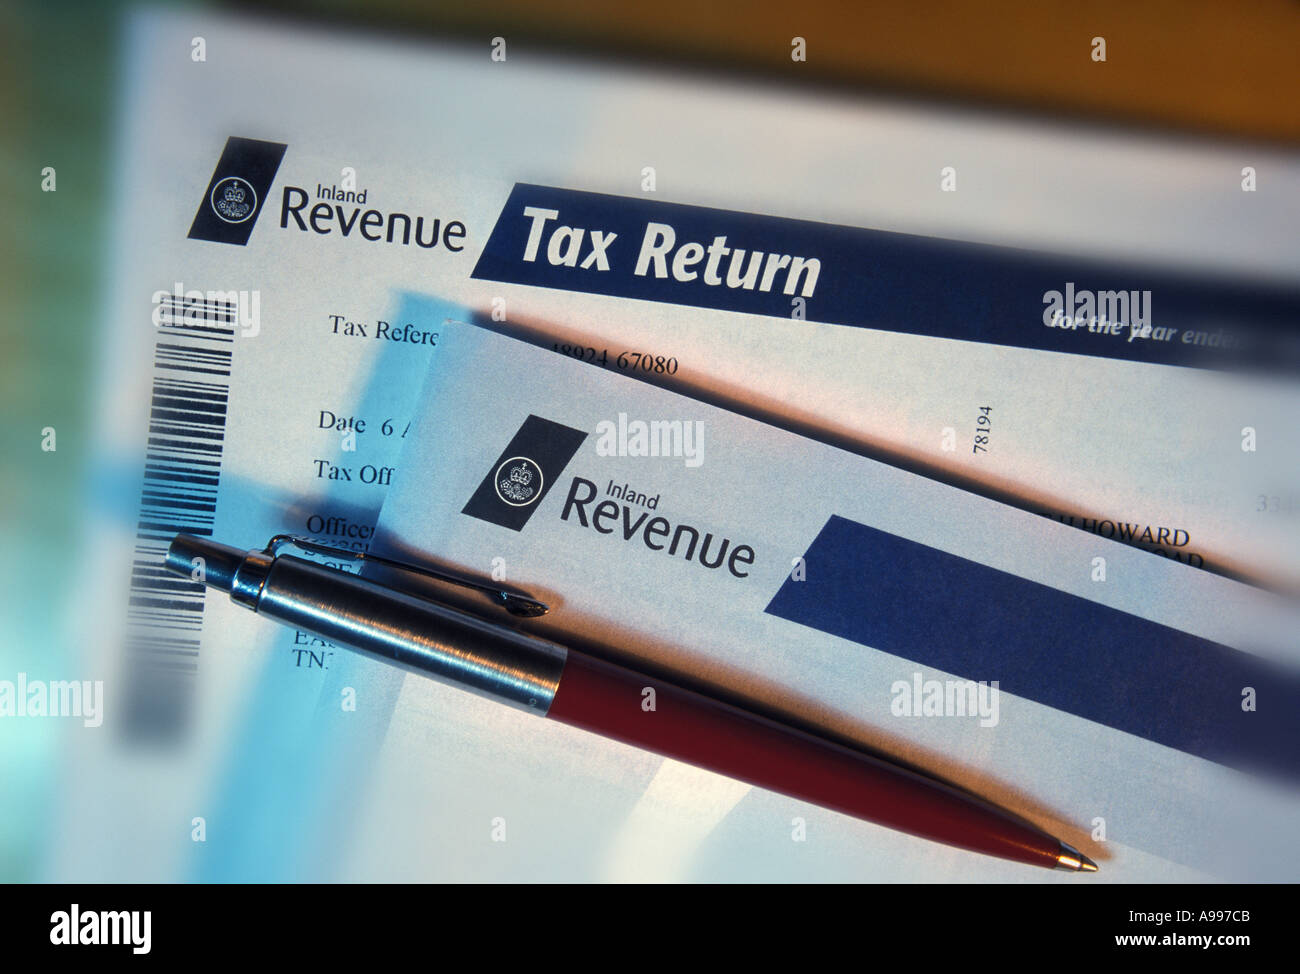 Tax Return Form For Inland Revenue UK Stock Photo Alamy